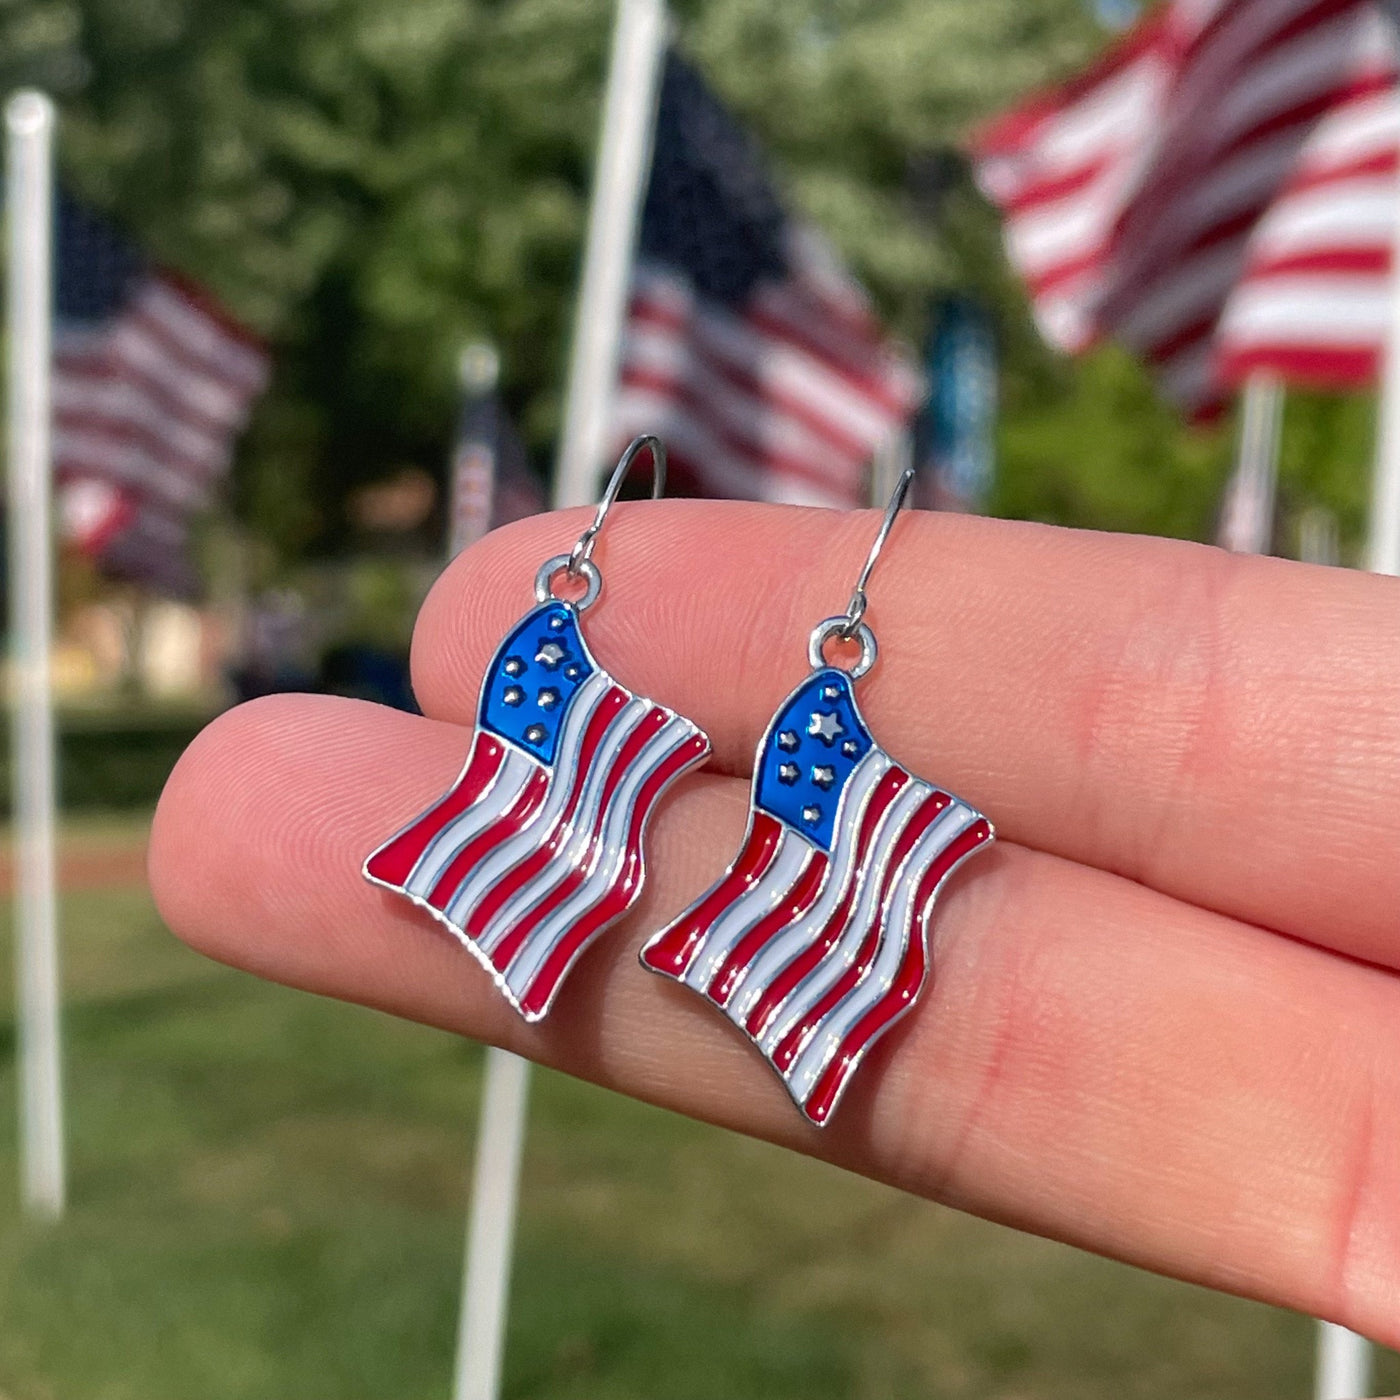 Adorable American Flag Earrings